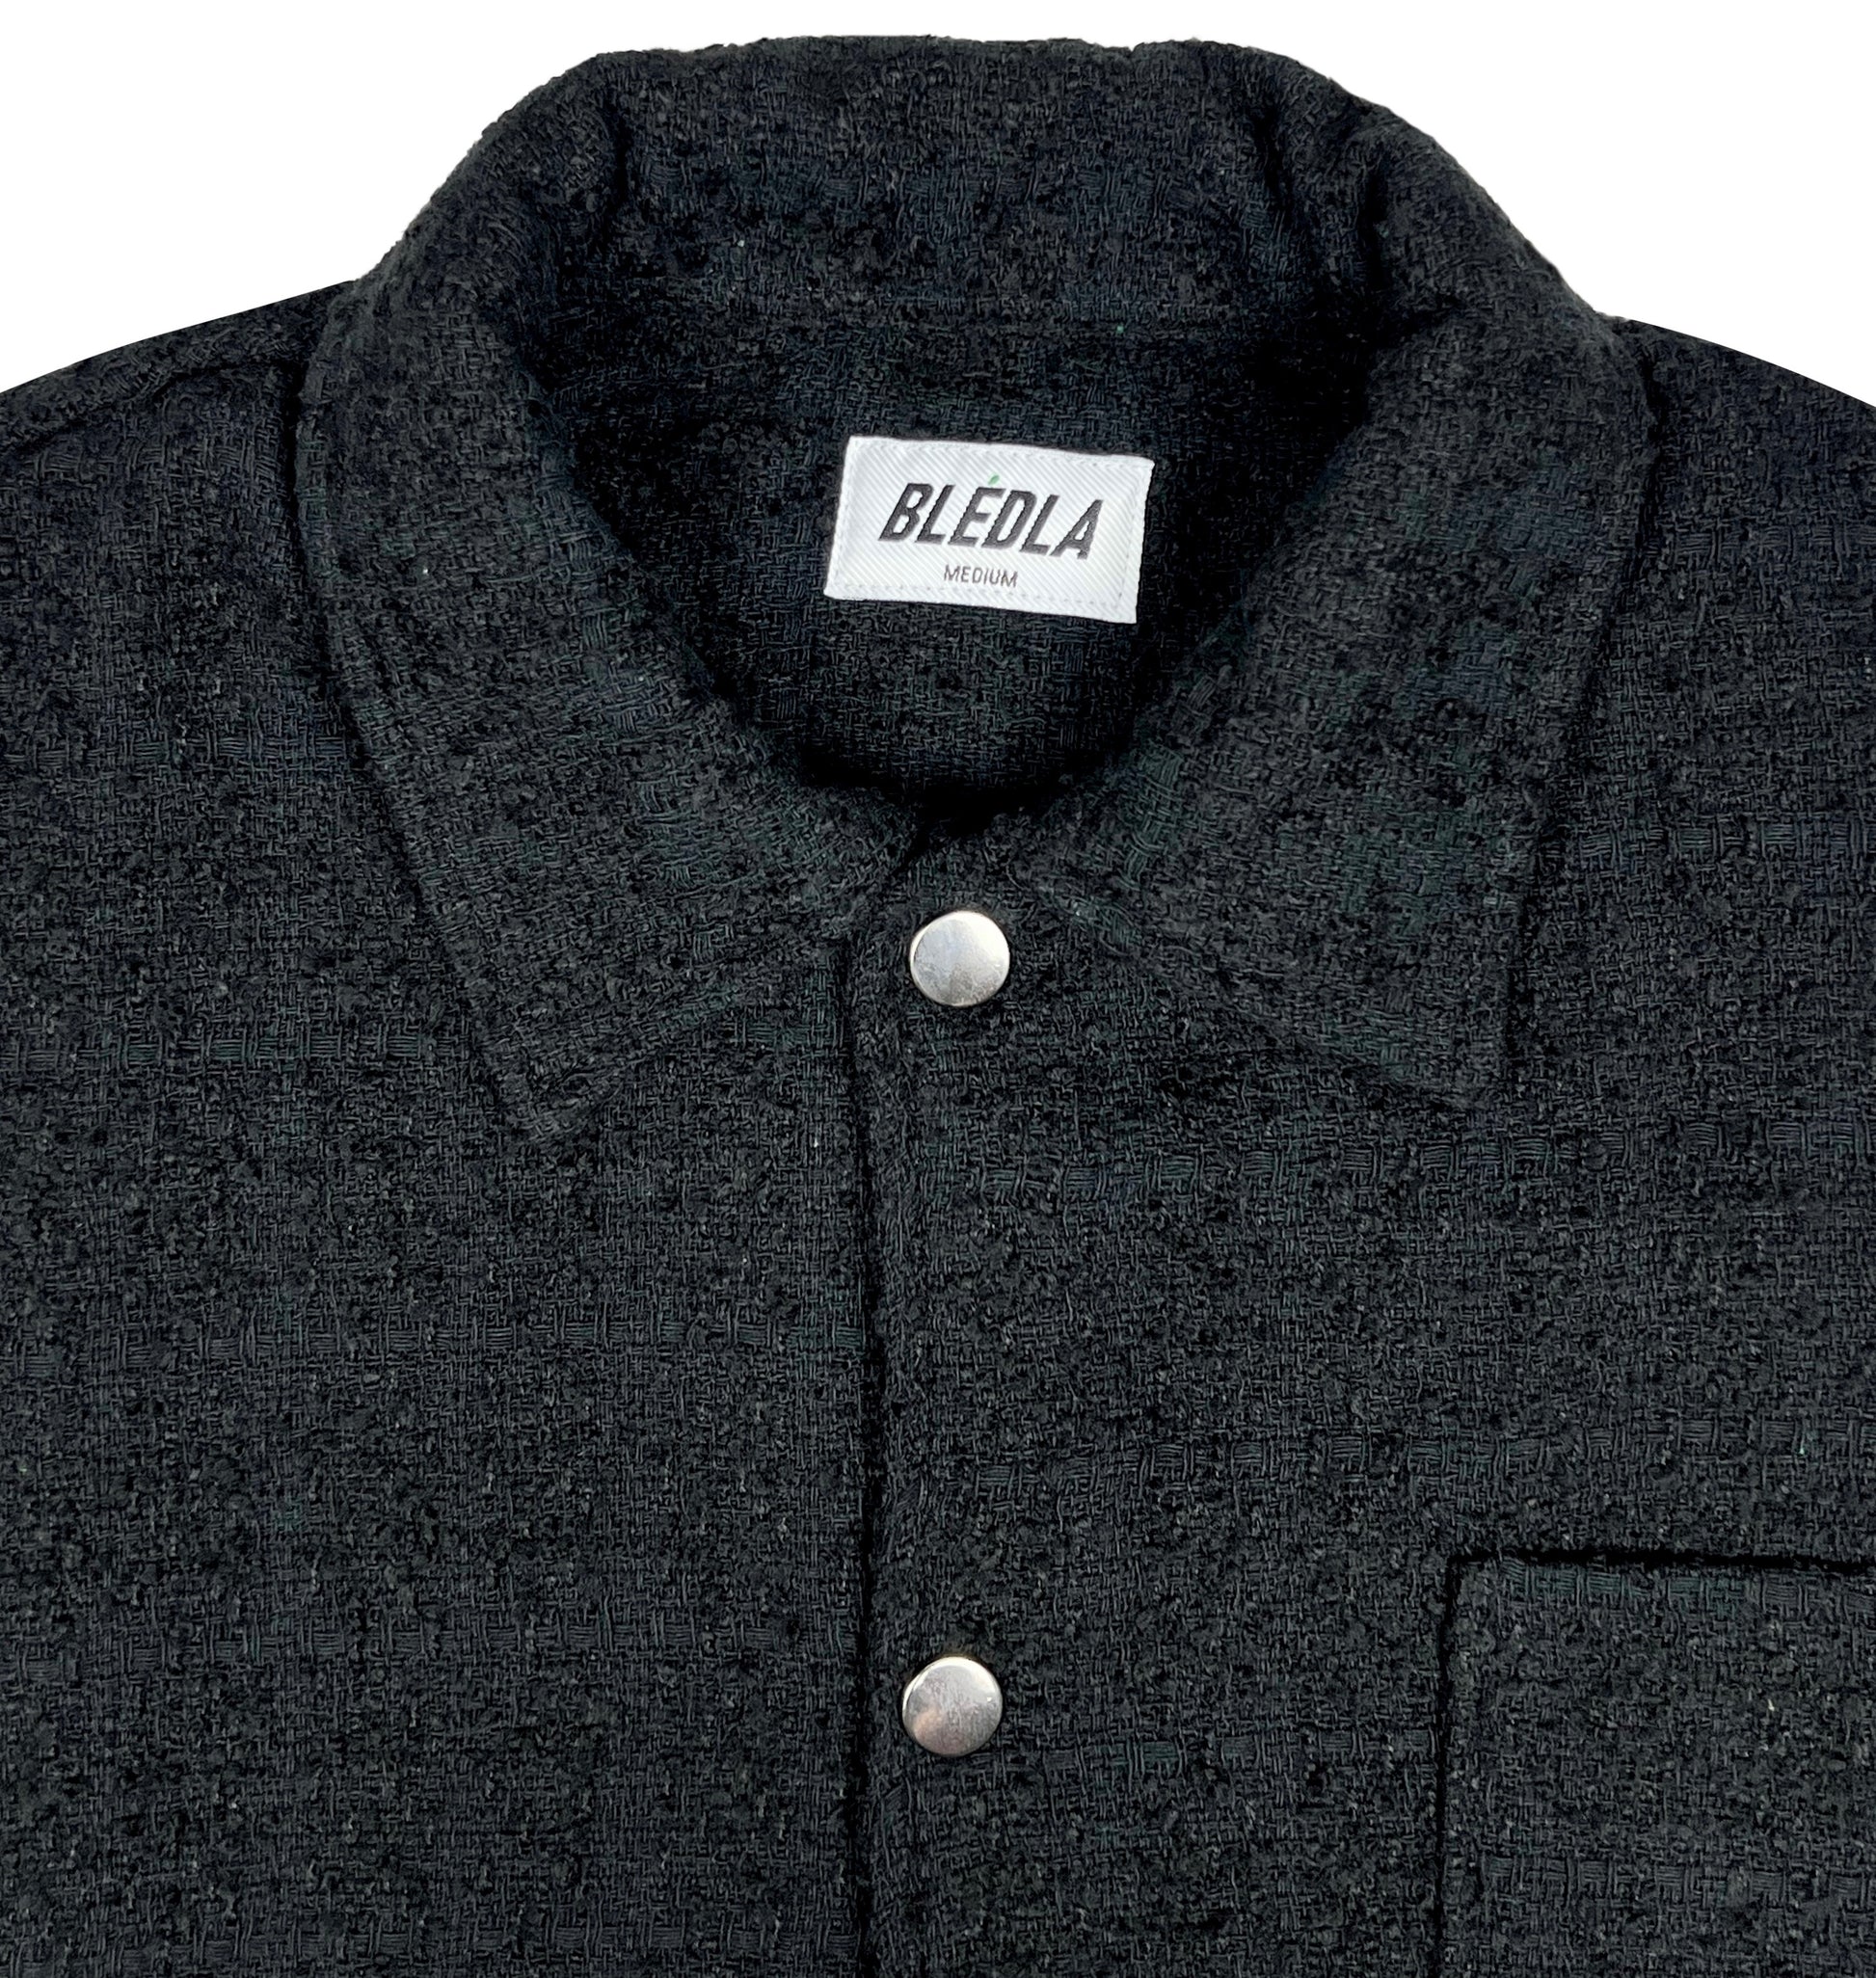 bledla-bled-textured shirt-textured overshirt-black textured shirt-long sleeve textured shirt-bledla clothing-bmw e30-luxury streetwear